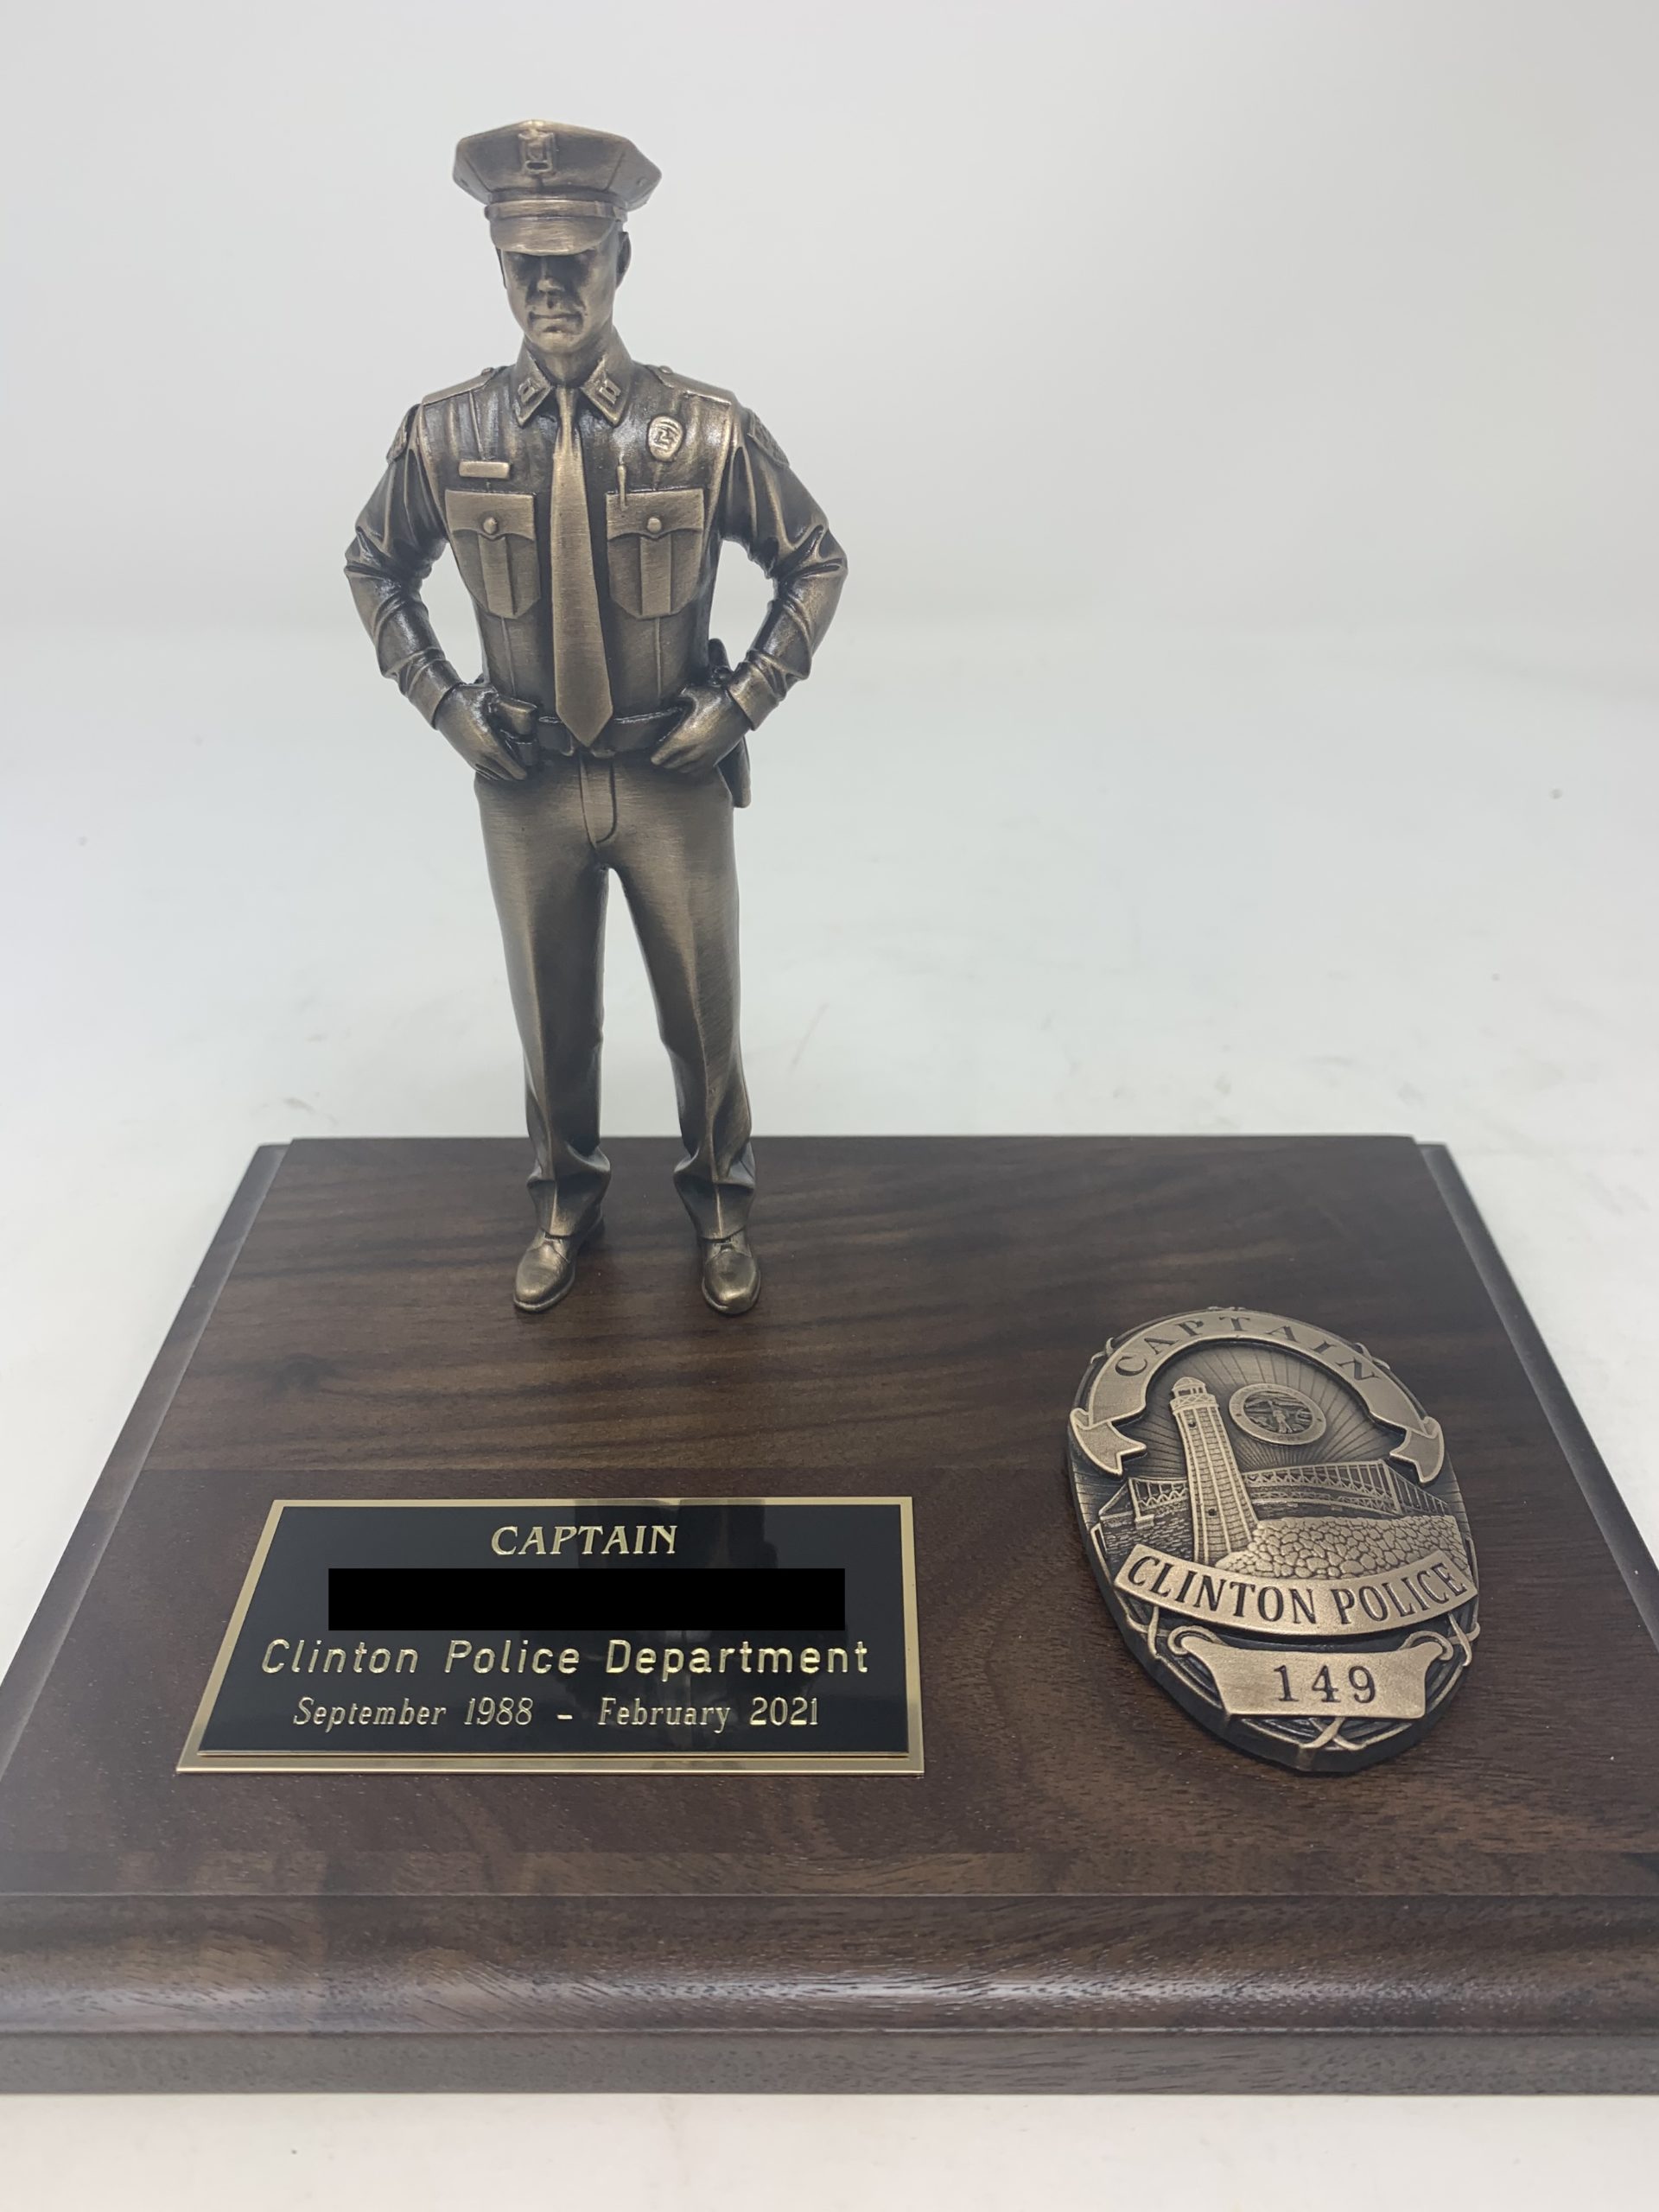 custom police figurine on a plaque